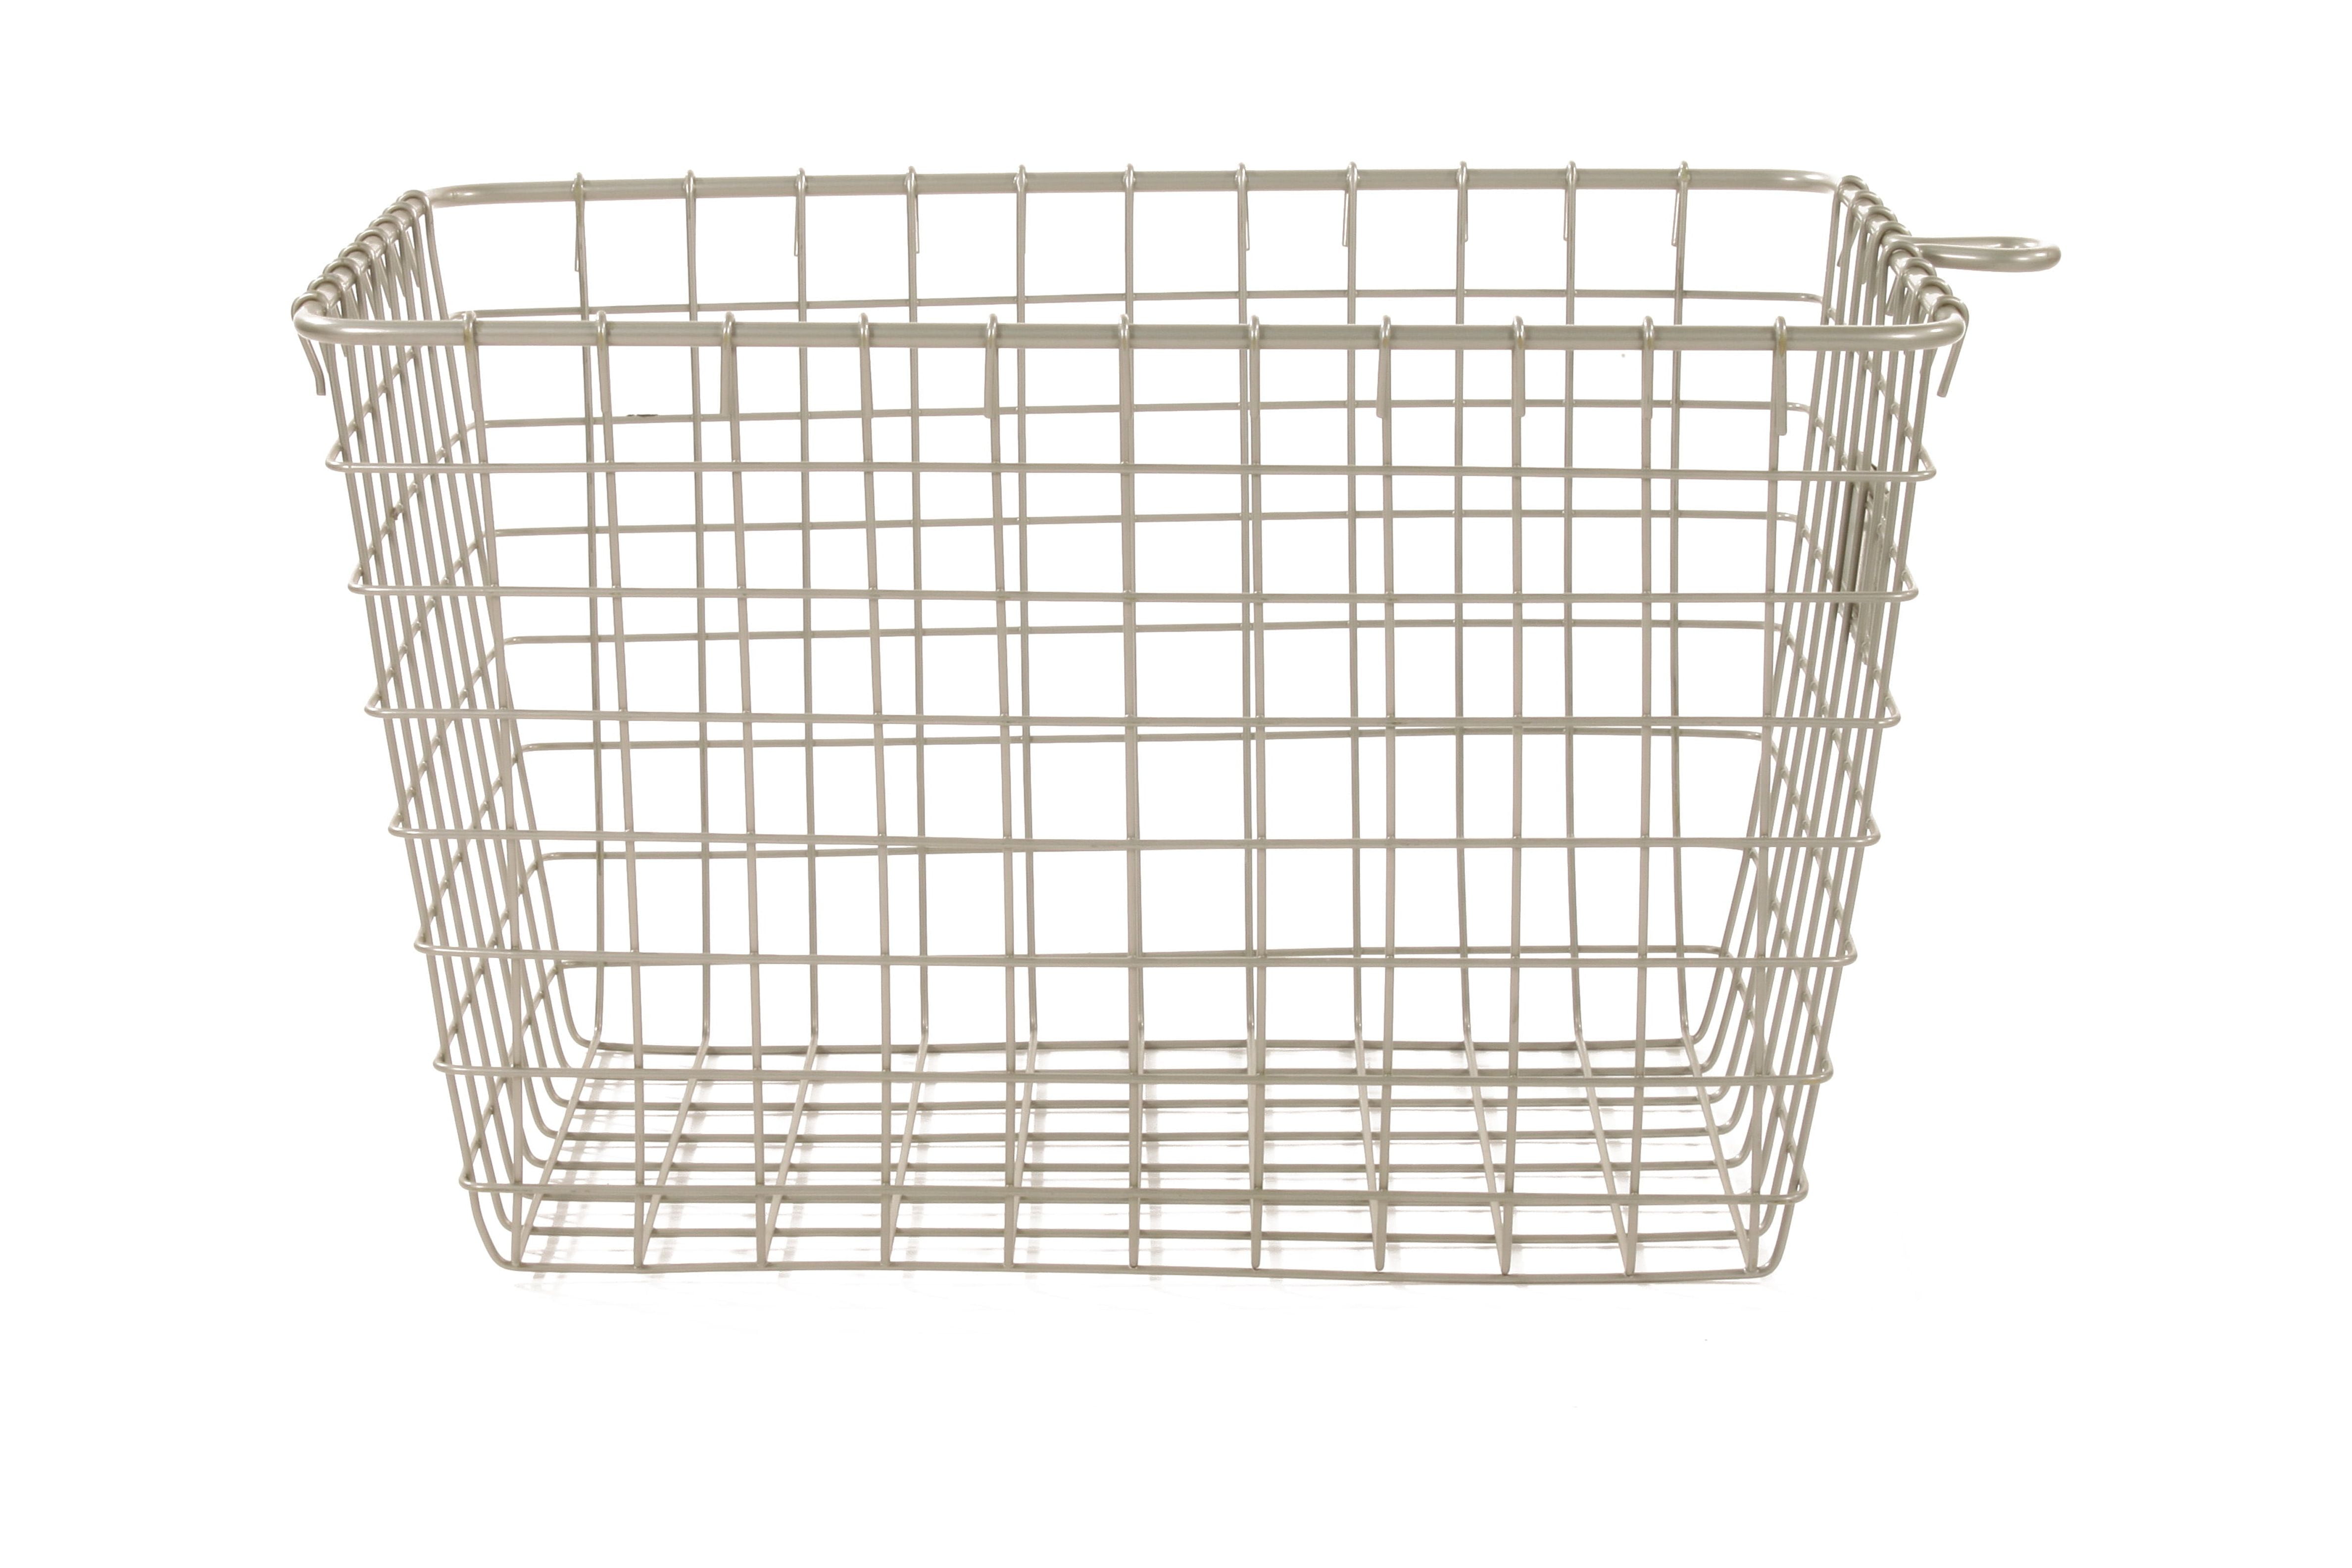 Top View Empty Closet Organization Boxes Steel Wire Baskets Different Stock  Photo by ©dalivl@yandex.ru 428717776